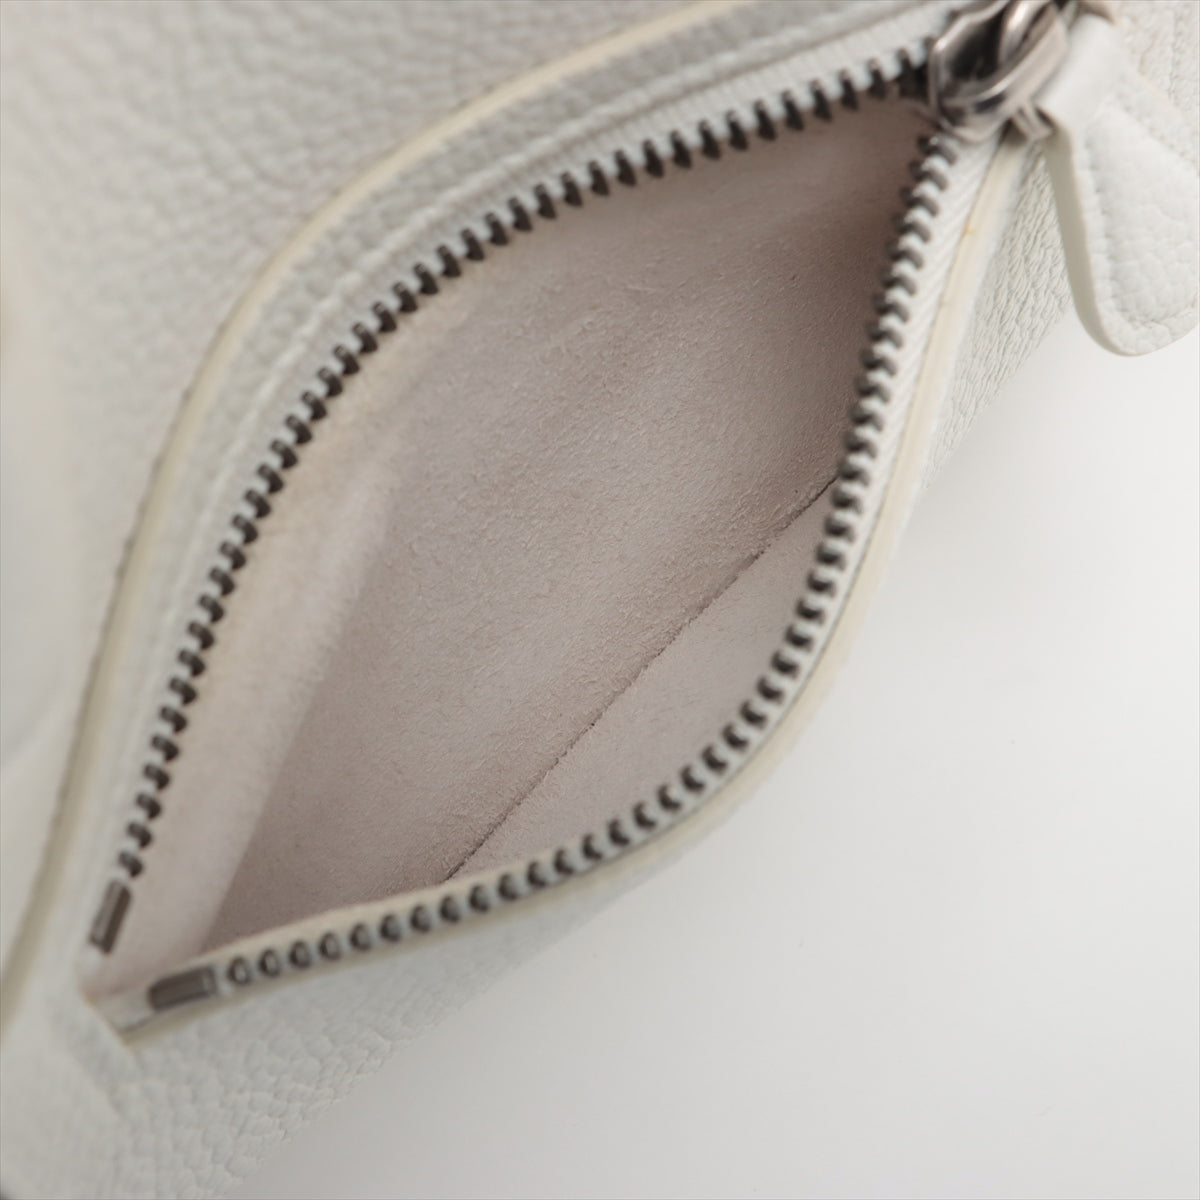 Celine Lugg Micro per Leather Handbag White Lagoon